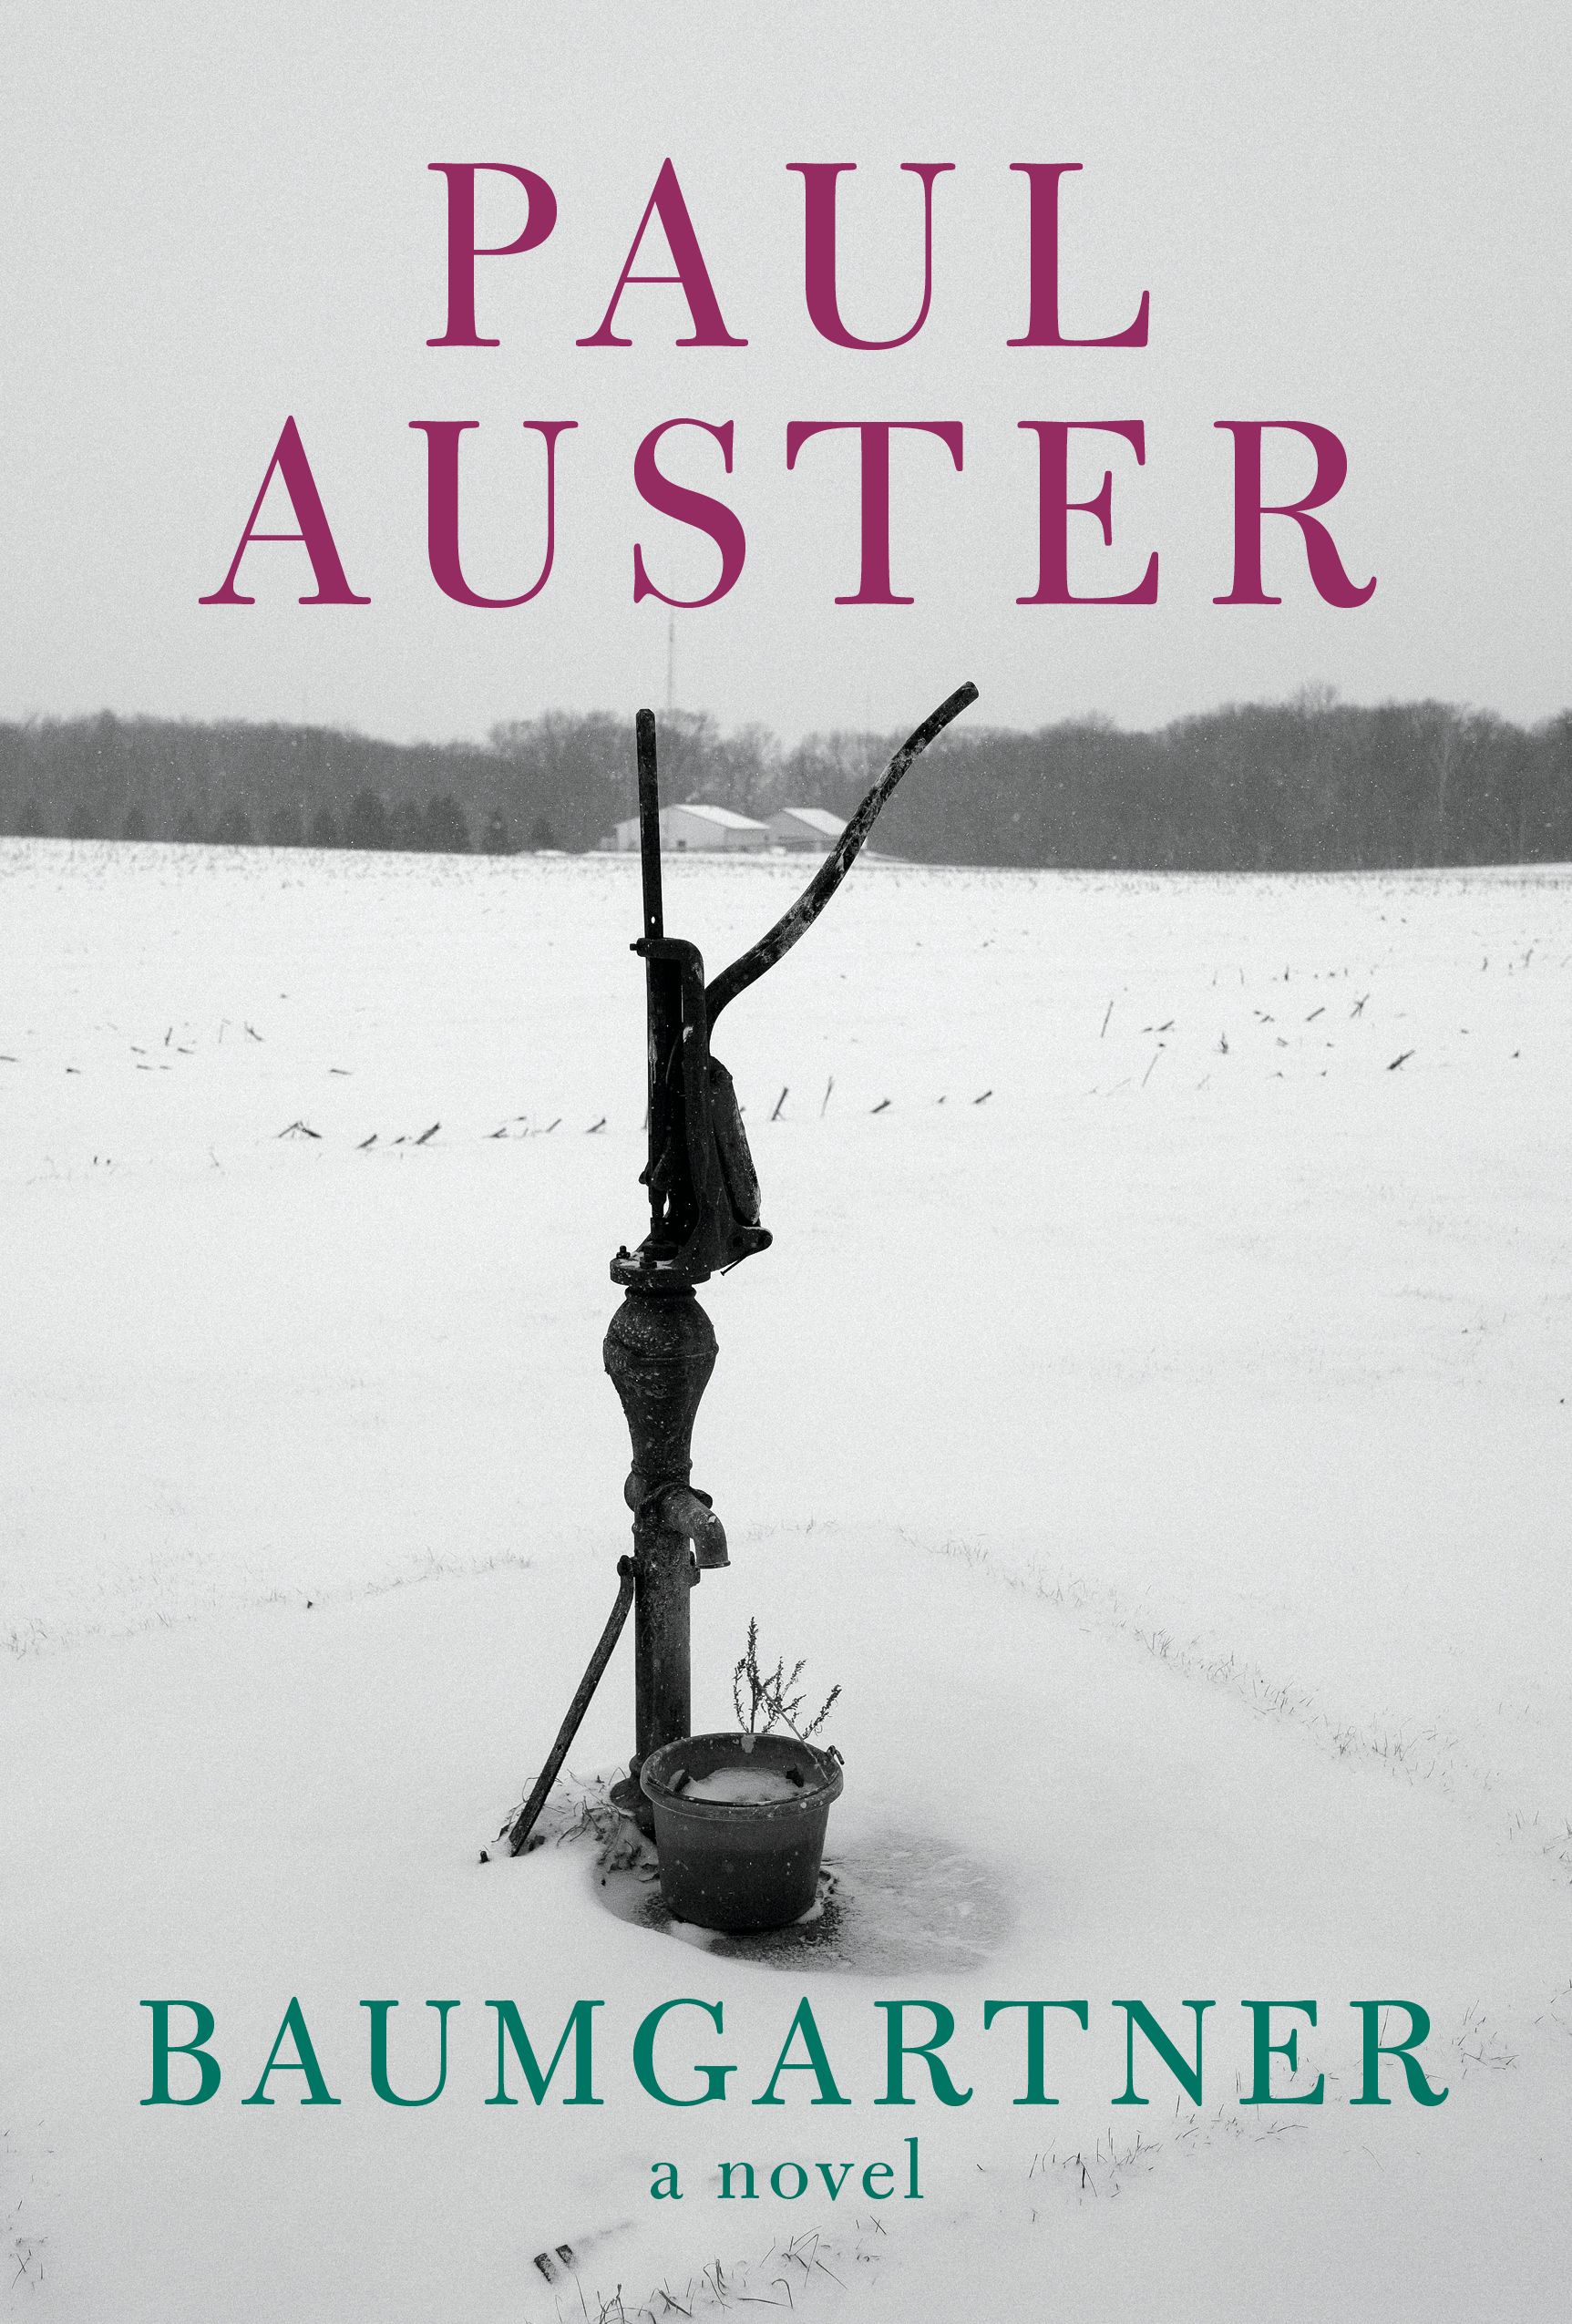 Novelist Paul Auster writes about home